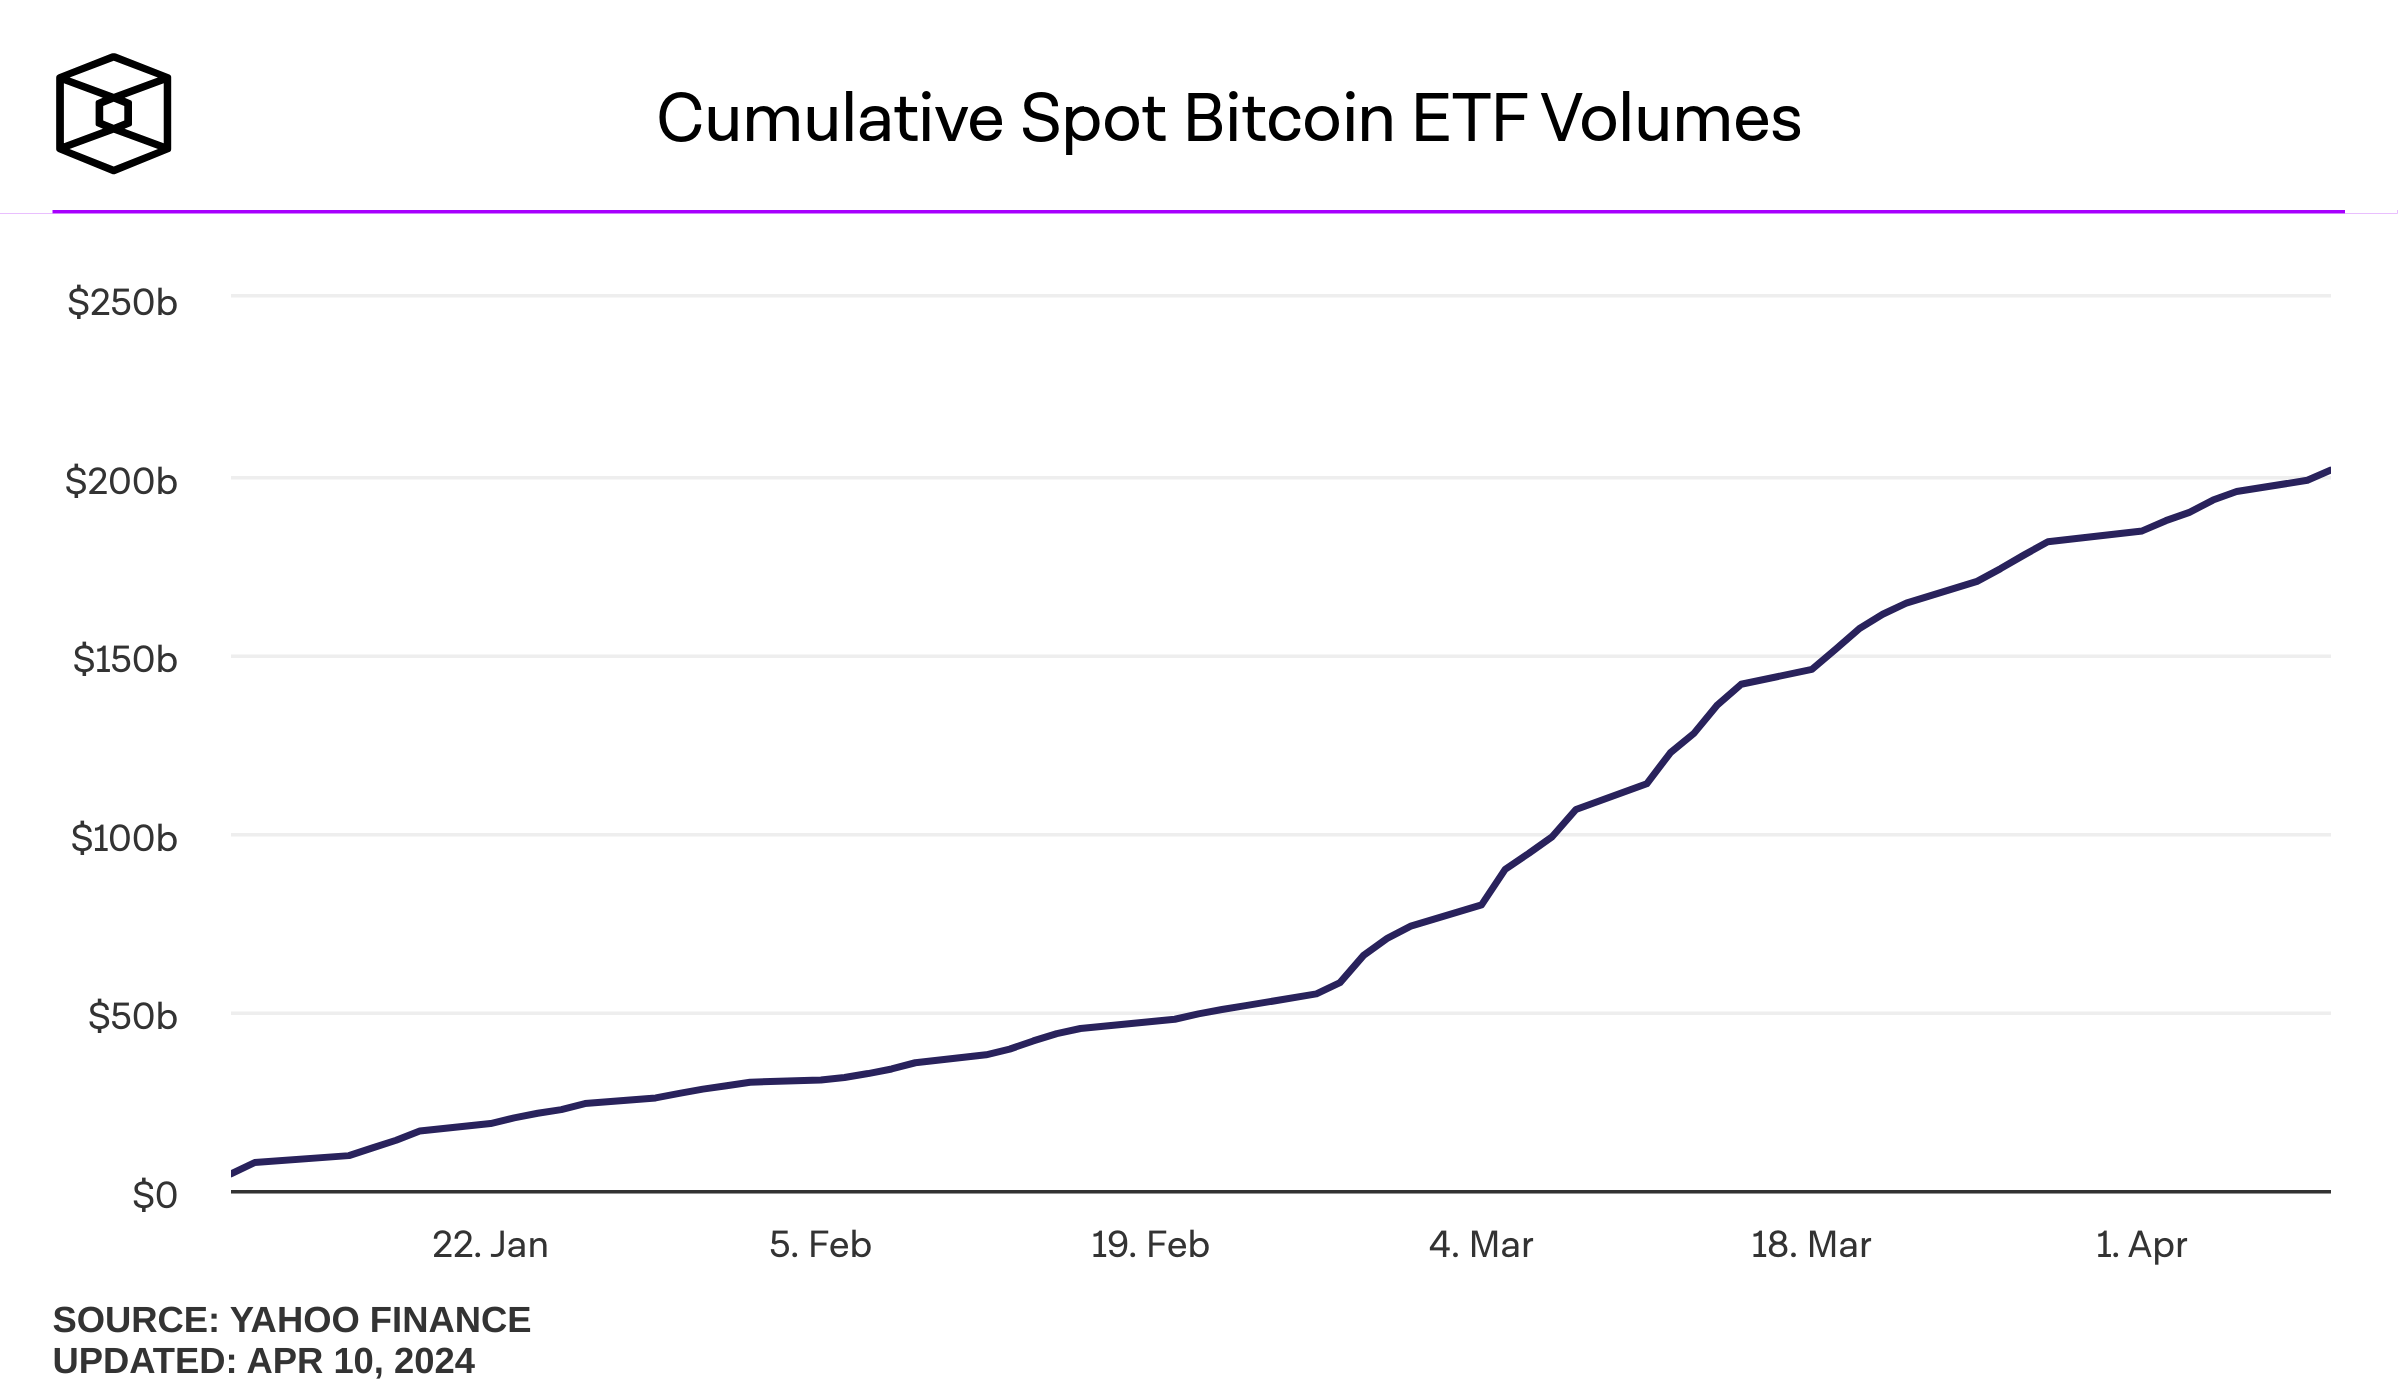 Spot Bitcoin ETFs Trading Volume Surpasses $200 Billion Mark